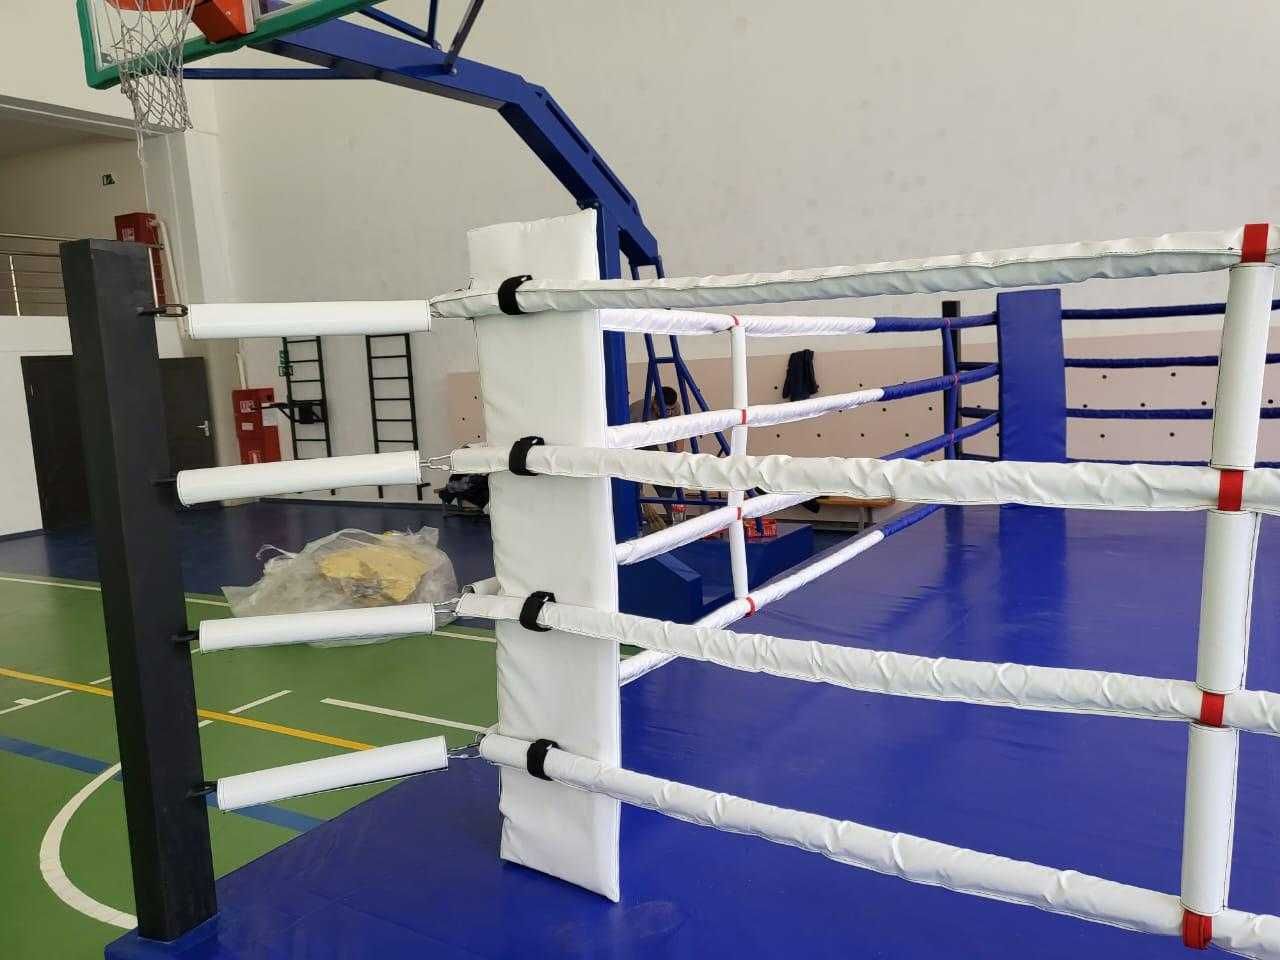 Боксерский ринг на раме 6м х 6м от производителя